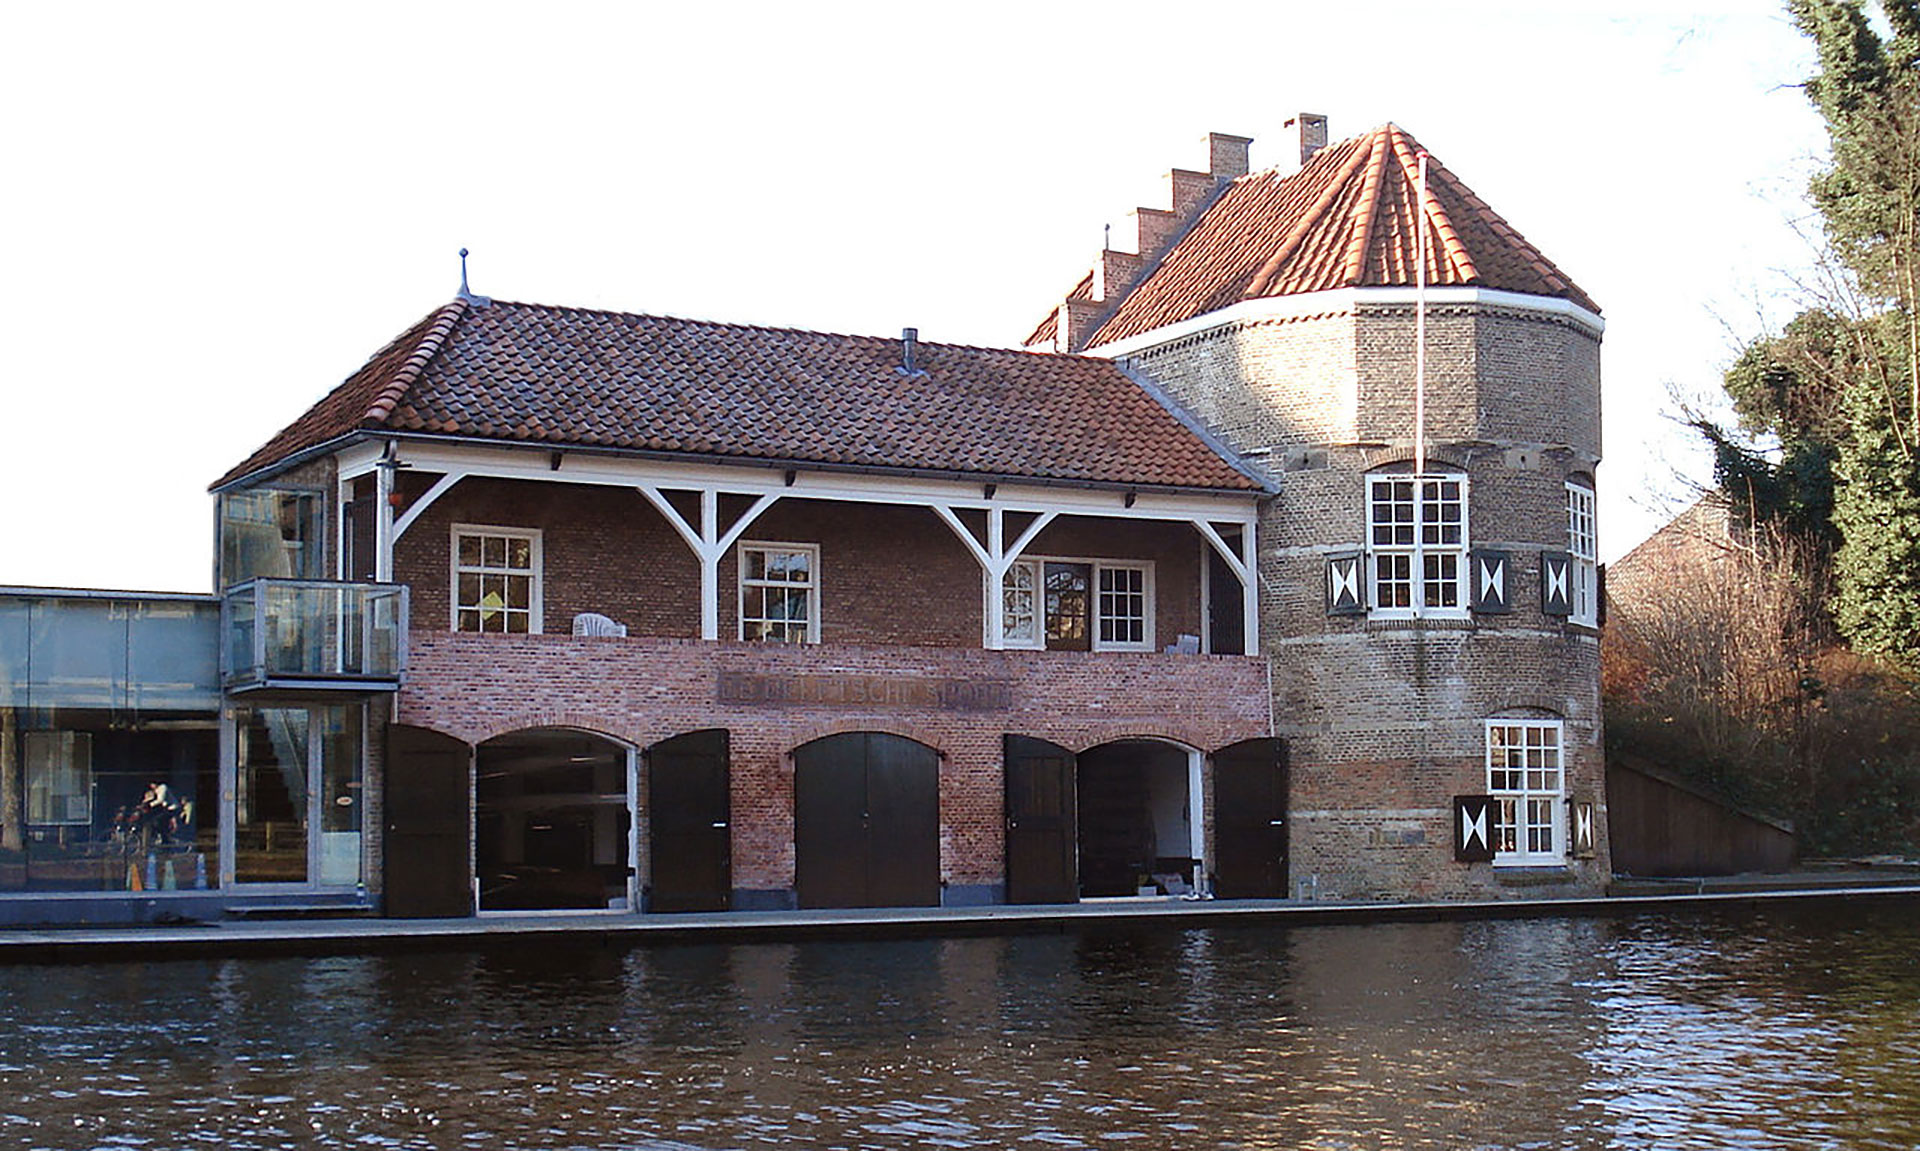  Casa para el club de remo de Delft